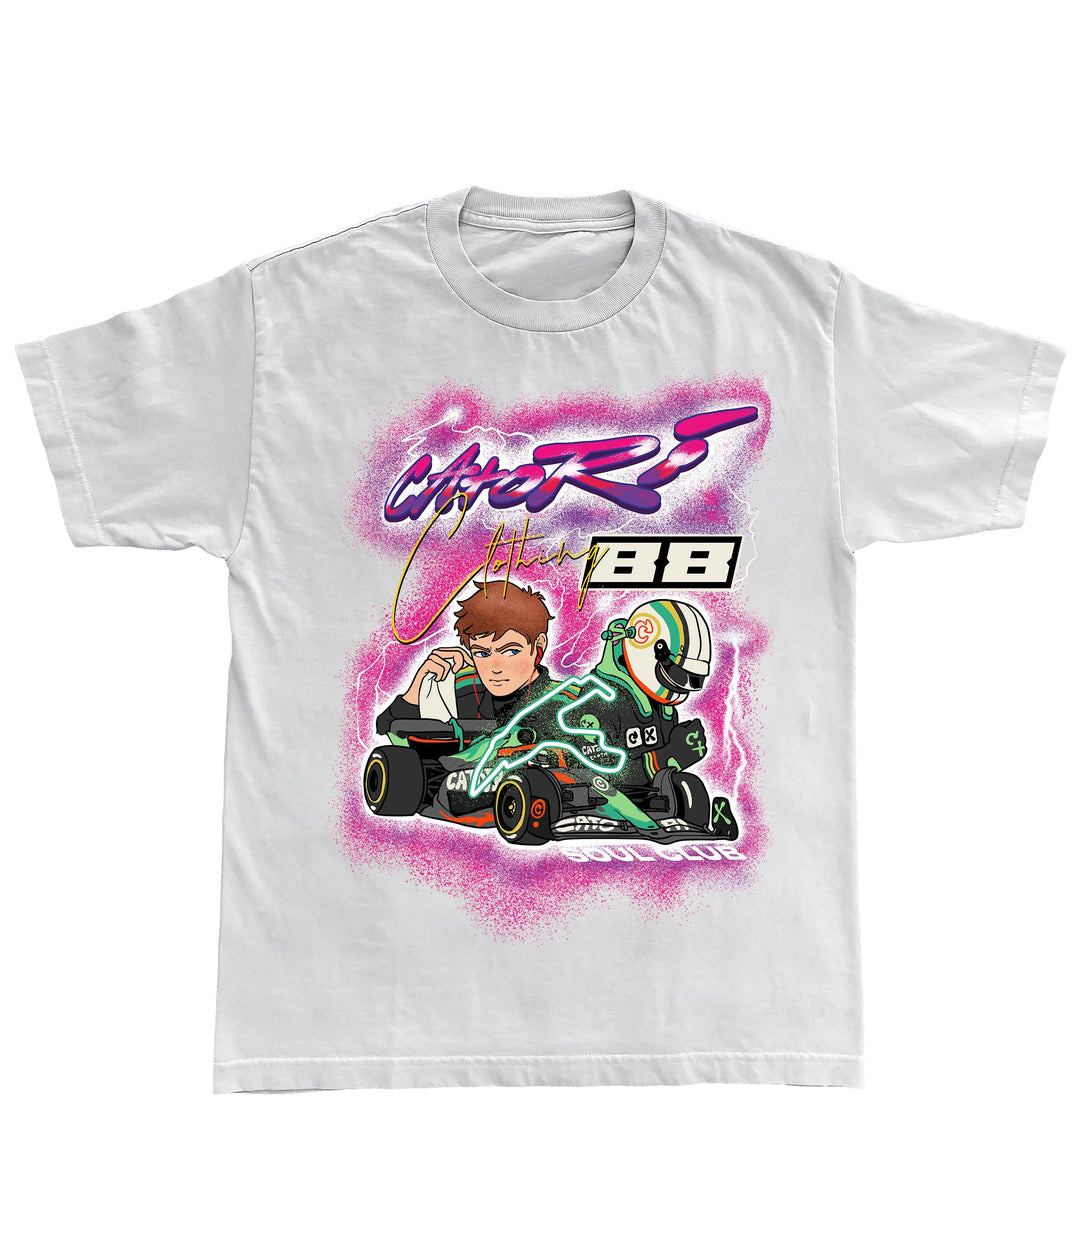 Speed Racer T-Shirt at Catori Clothing | Graphic & Anime Tees, Hoodies & Sweatshirts 